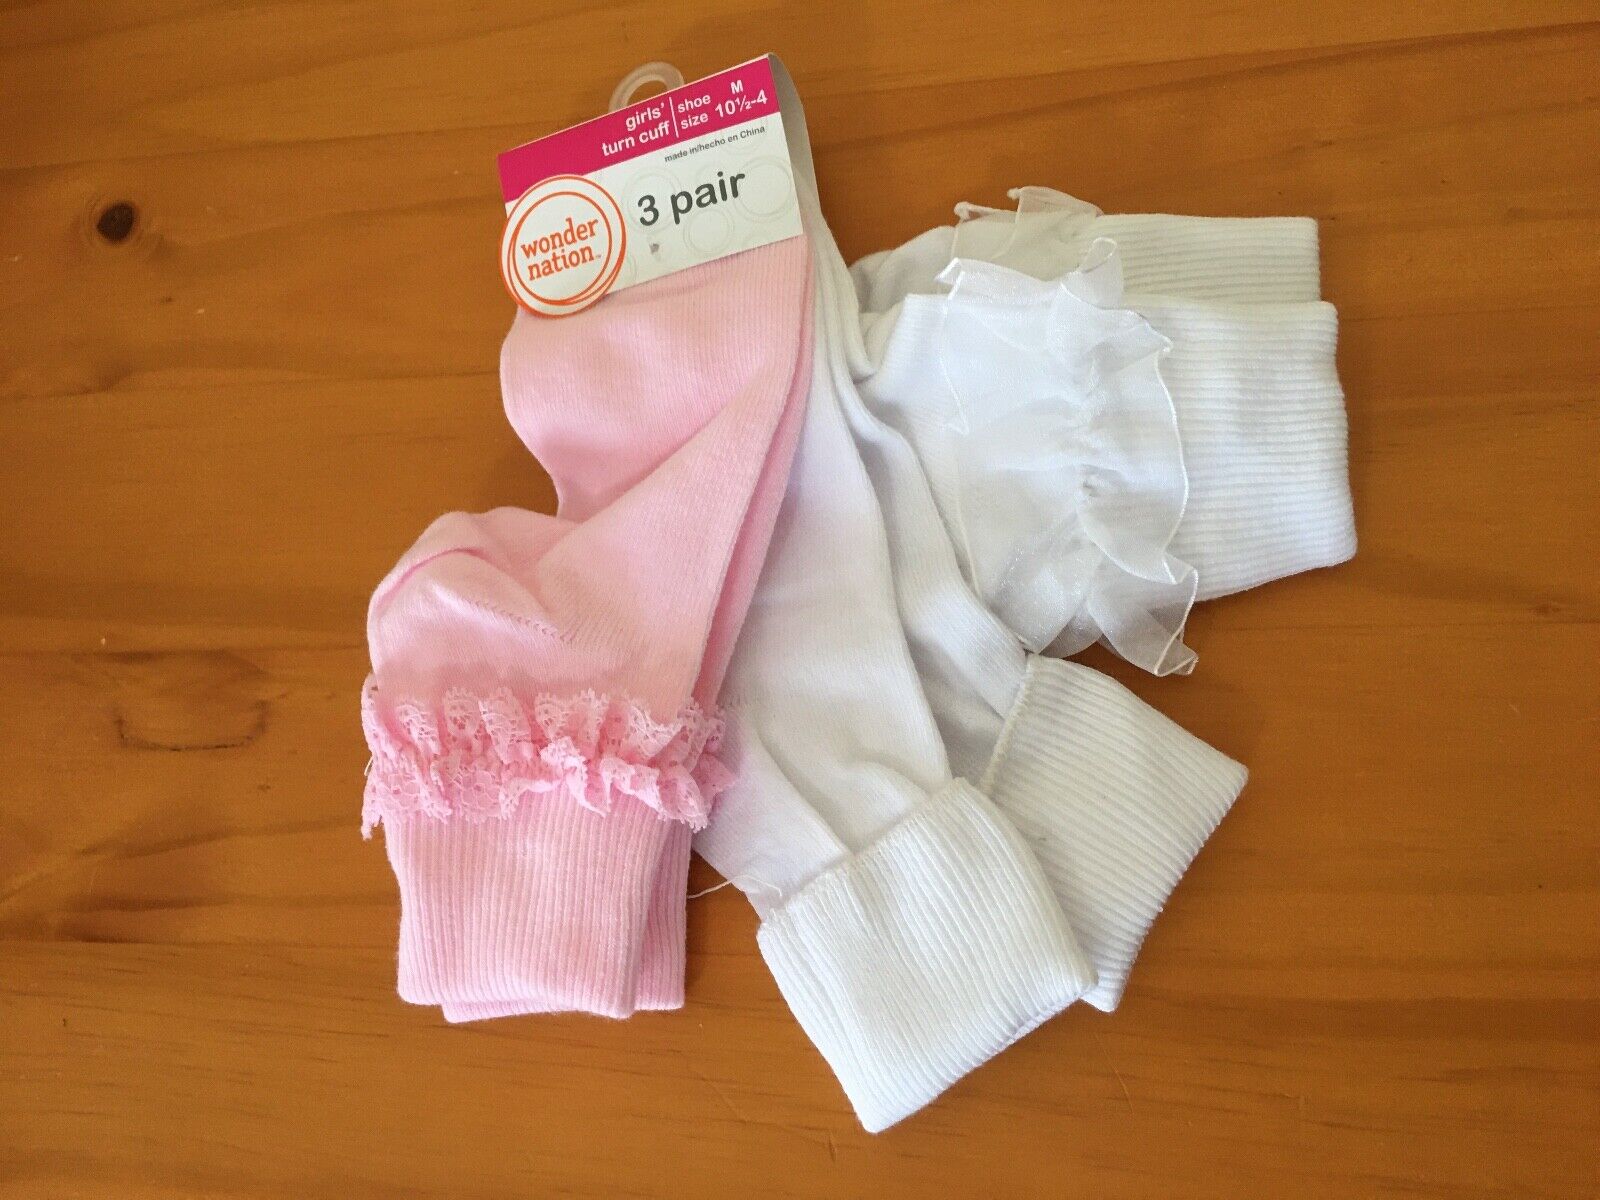 New Wonder Nation Girl Turn Cuff Socks 3 Paris Pack Pink White S M L